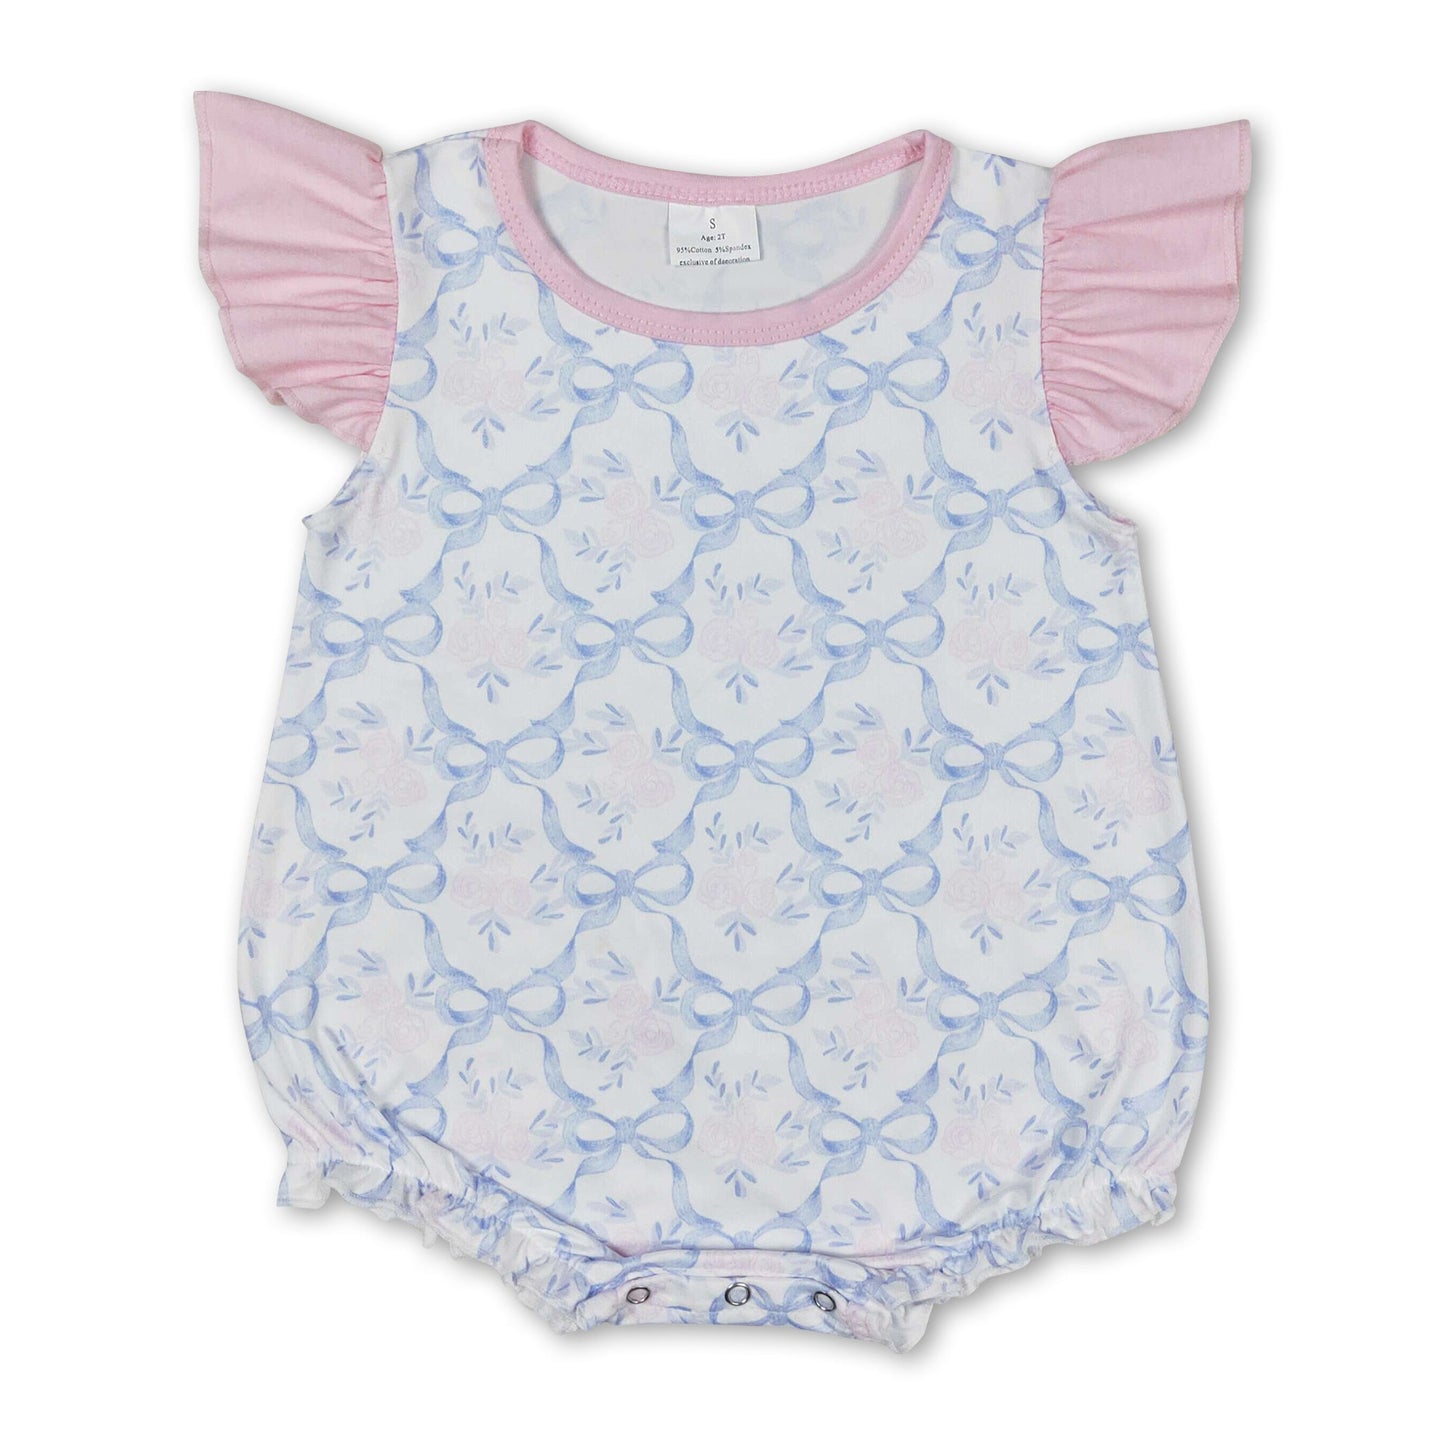 Flutter sleeves pink floral bow print baby girls romper